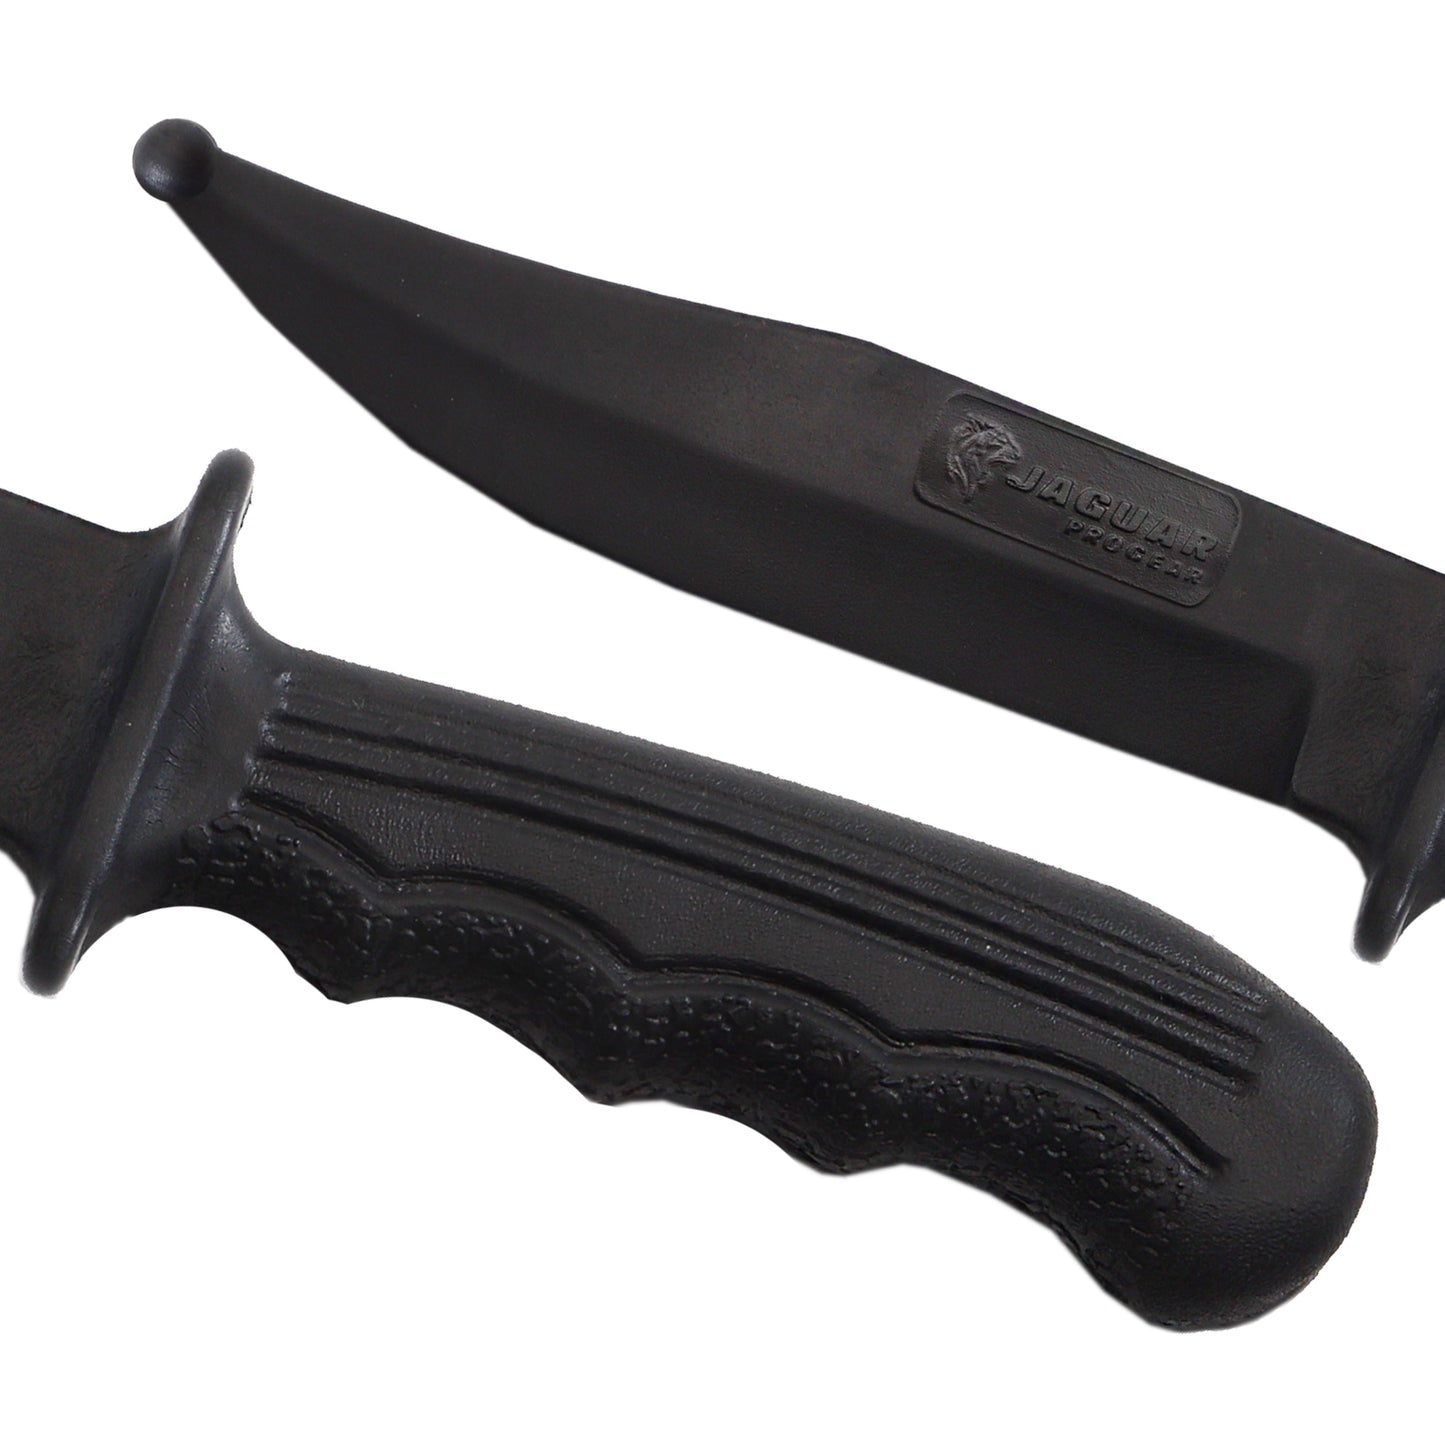 JAGUAR PRO GEAR - Flexible Hard Plastic Rubber Knife - Training Dummy Knife For Self Defence Training (Curved-Black)